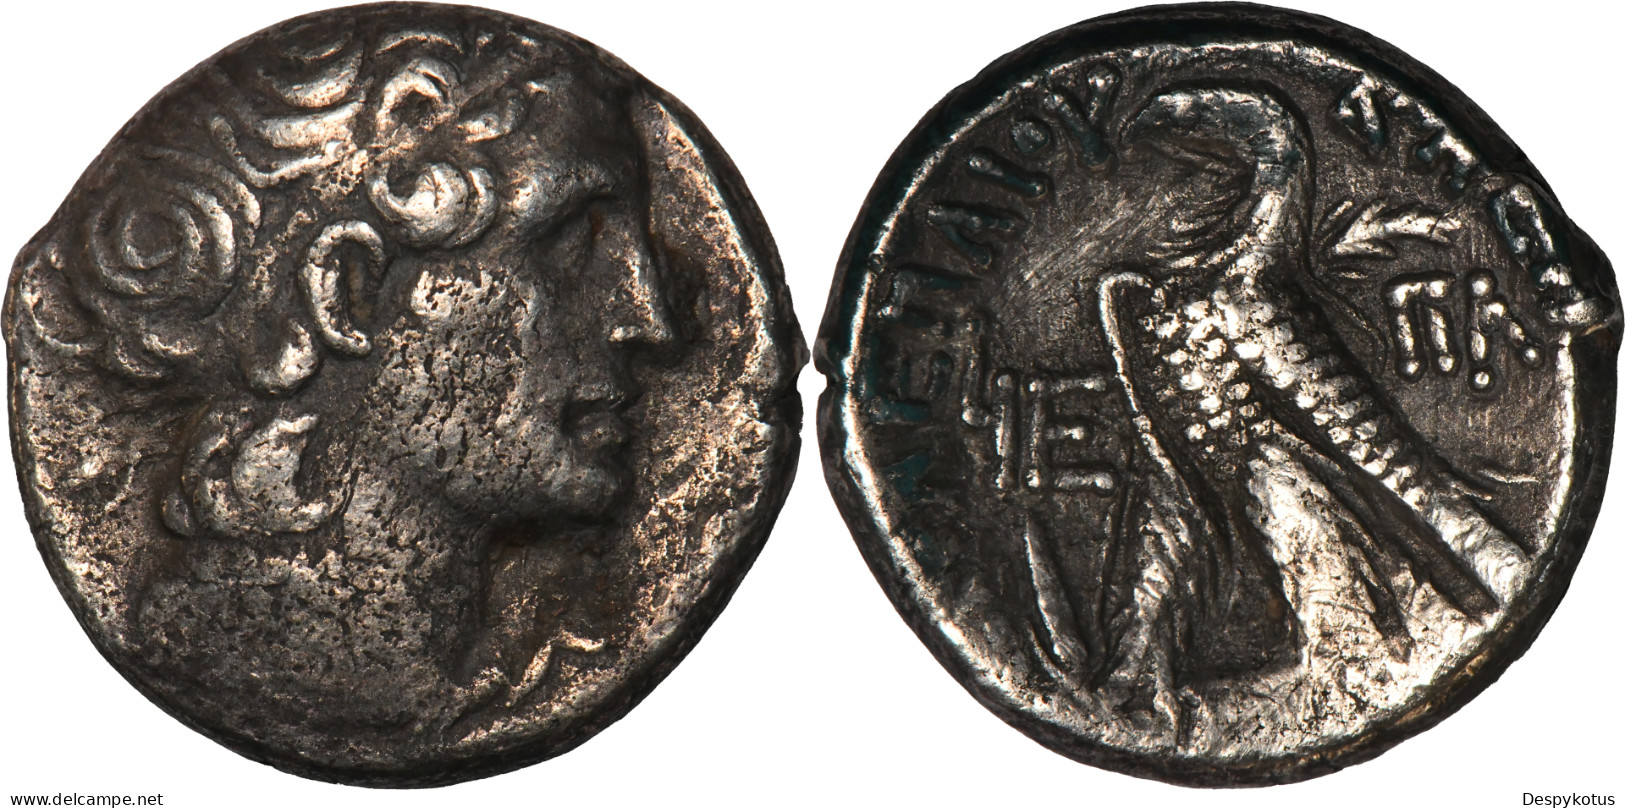 GRECE ANTIQUE - Tetradrachme - EGYPTE, Alexandrie - Cléopatre VII / Ptolémée XV - TRES RARE - 19-270 - Grecques